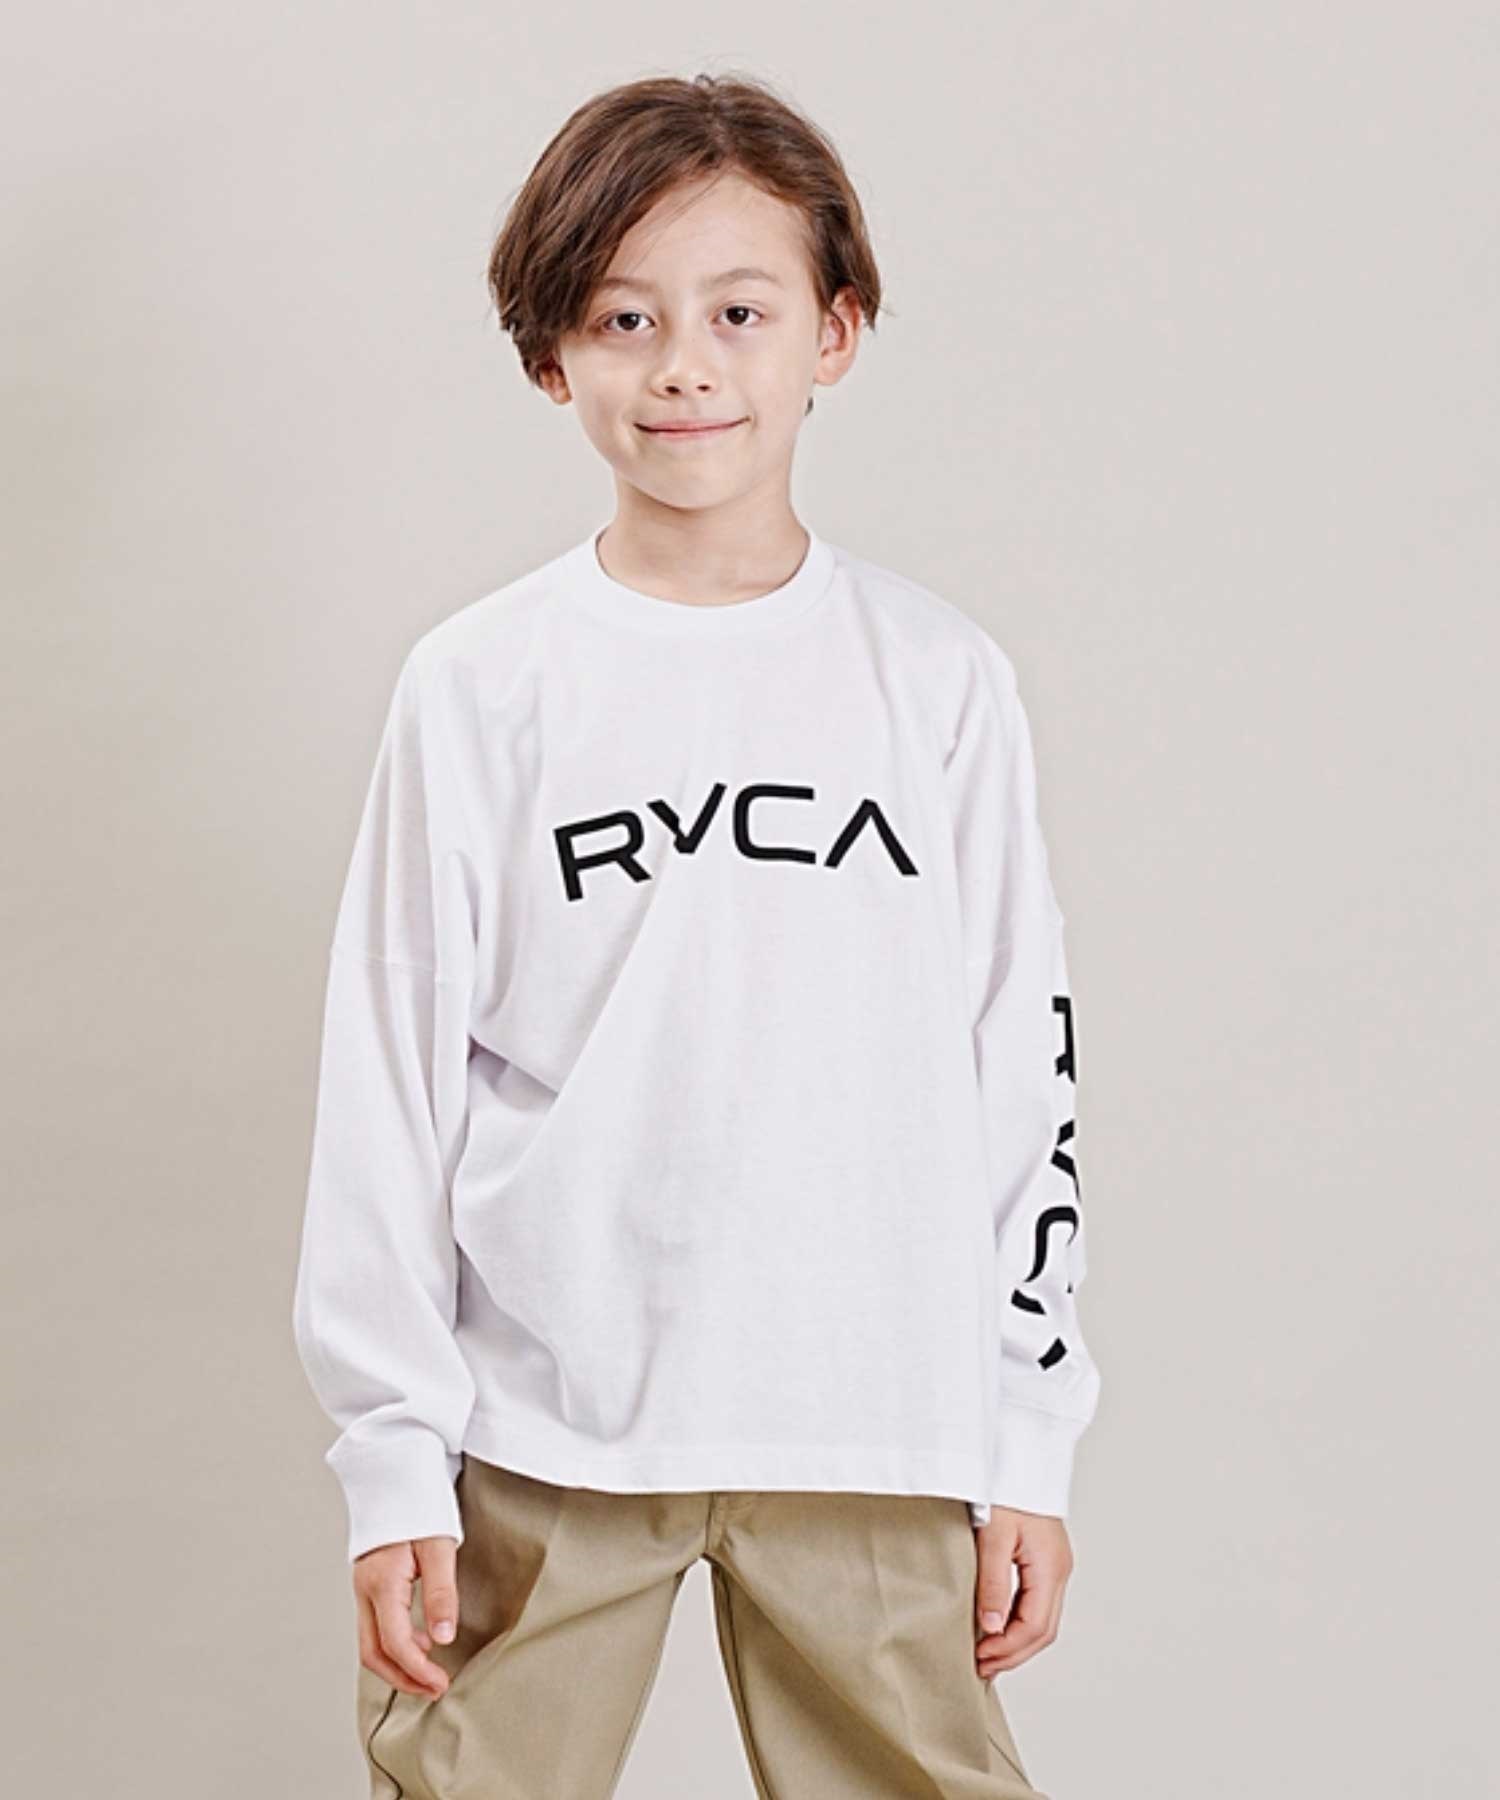 RVCA/ルーカ RVCA BALANCE LT キッズ ジュニア 長袖 Tシャツ ロンT 背中 腕 ロゴ BD046-064(BLK-130cm)